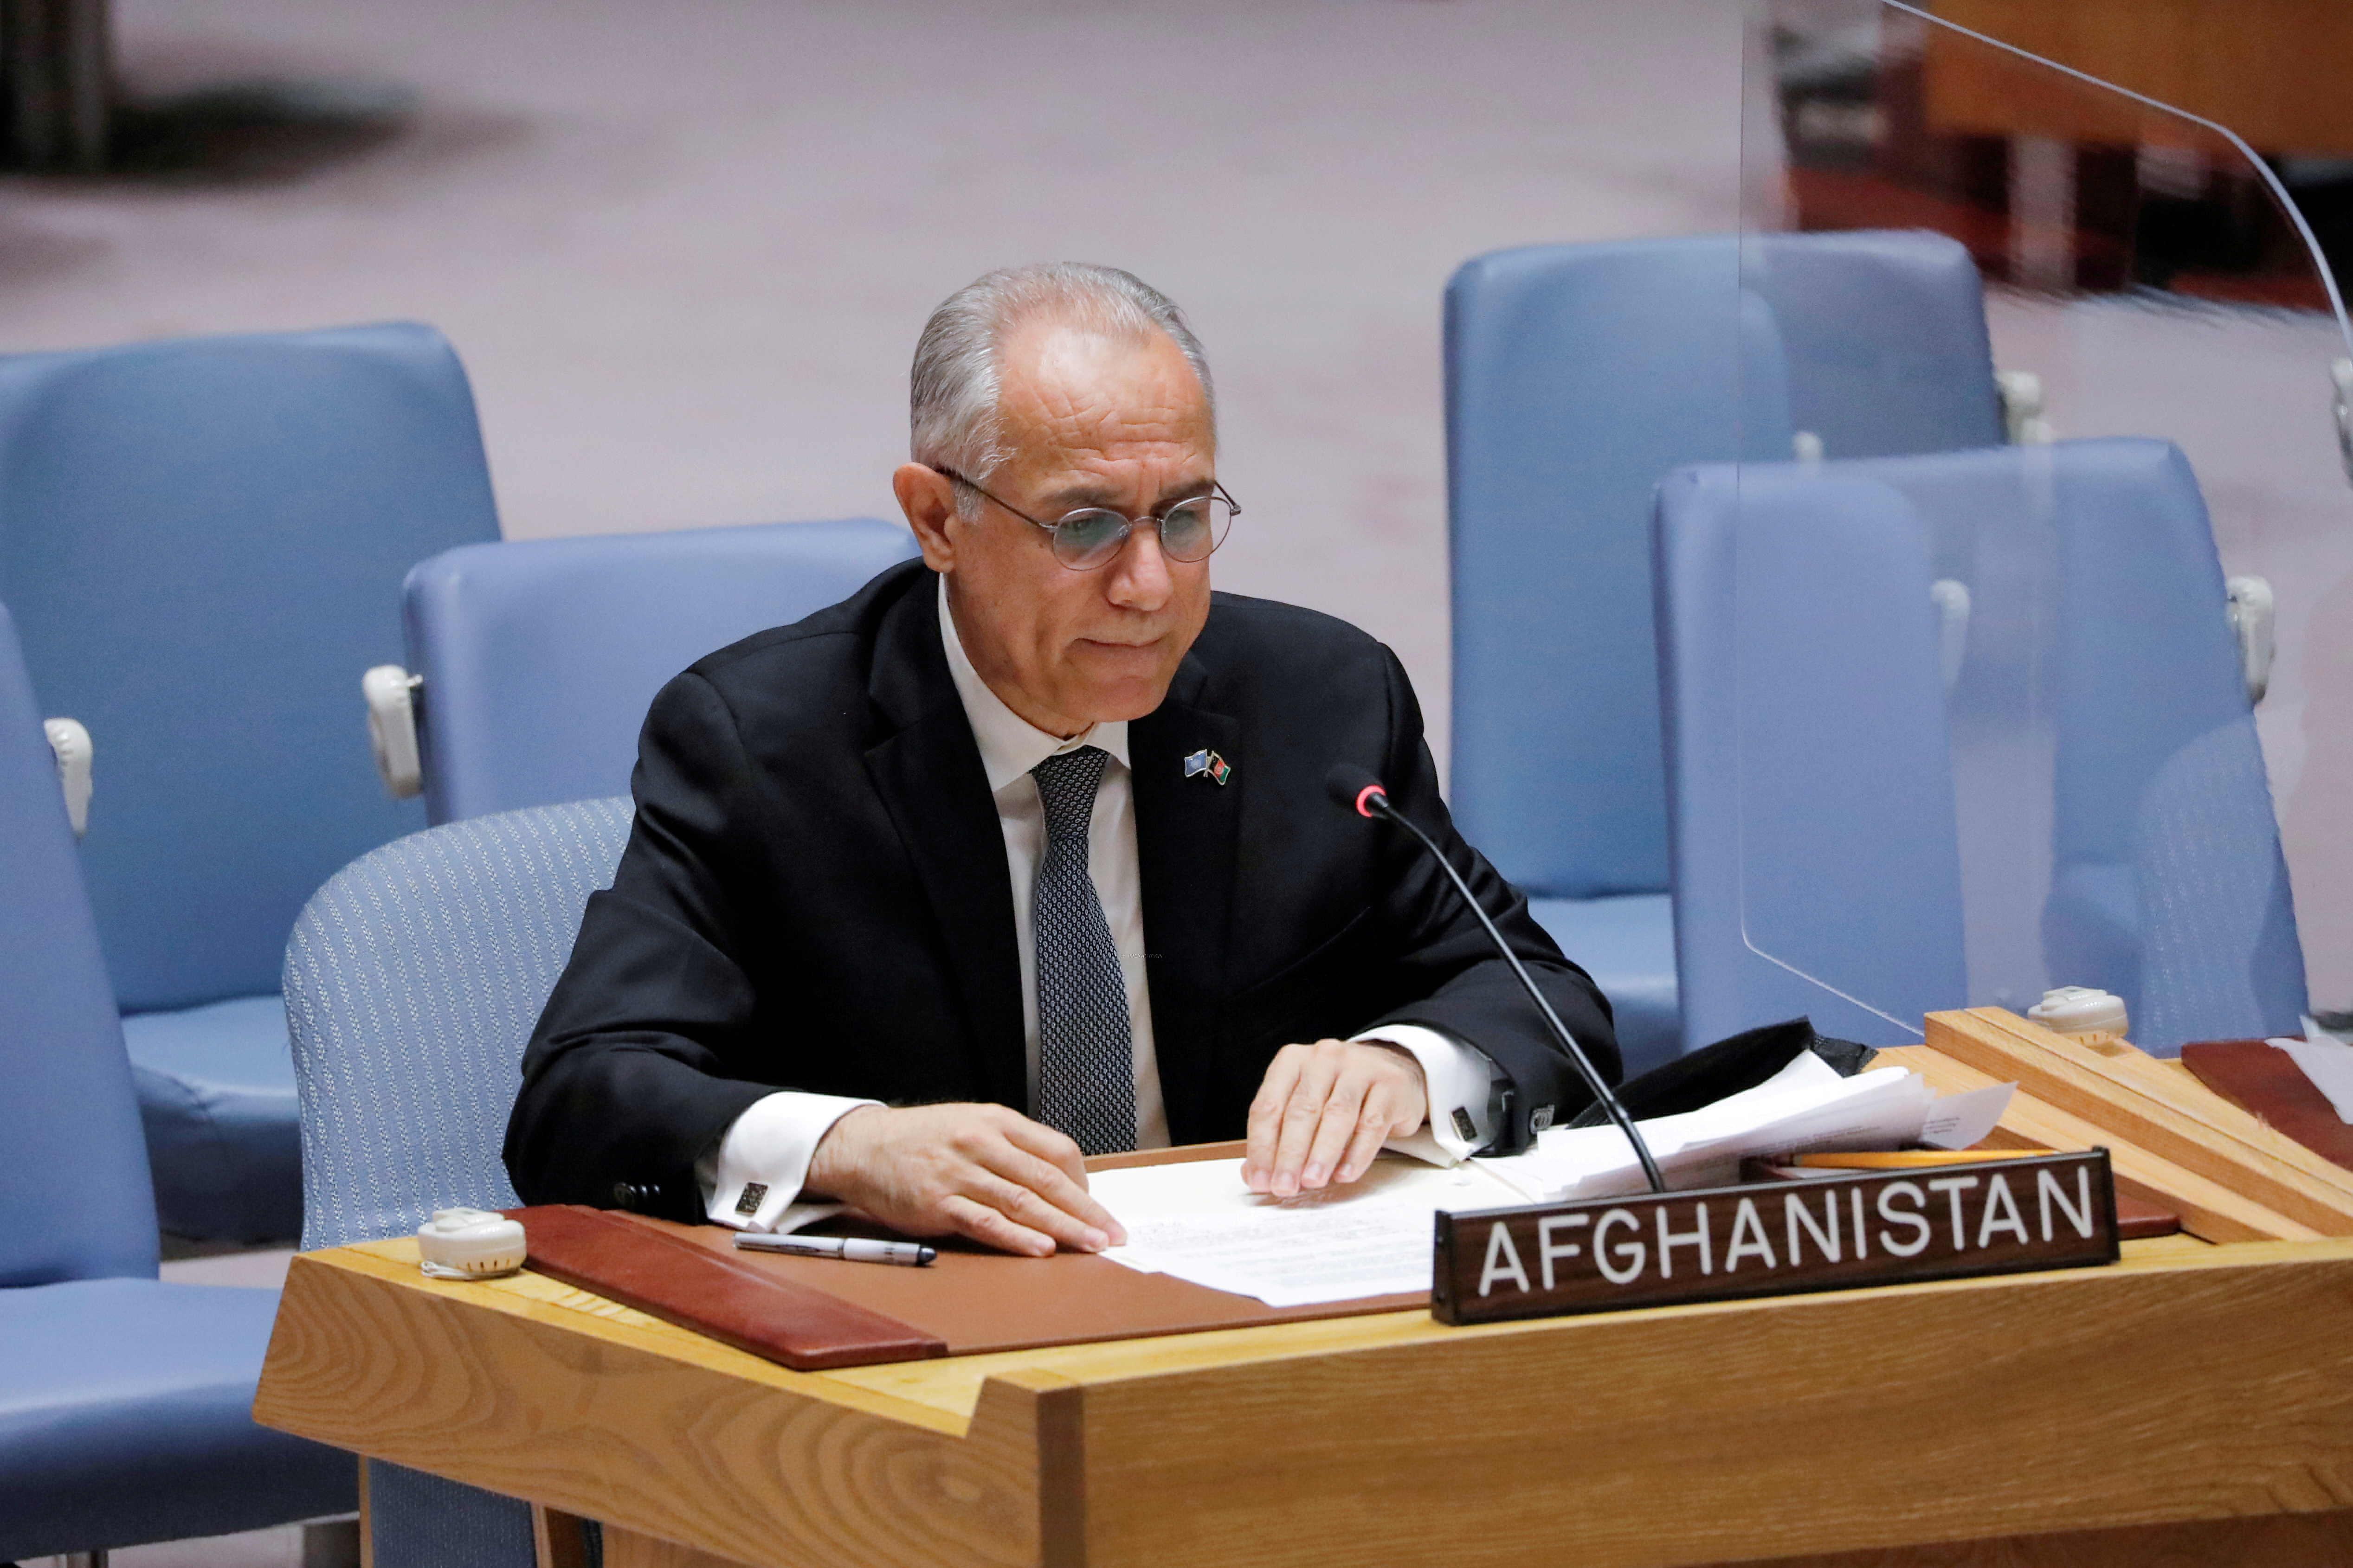 Afghanistan's U.N. ambassador Ghulam Isaczai addresses the United Nations Security Council